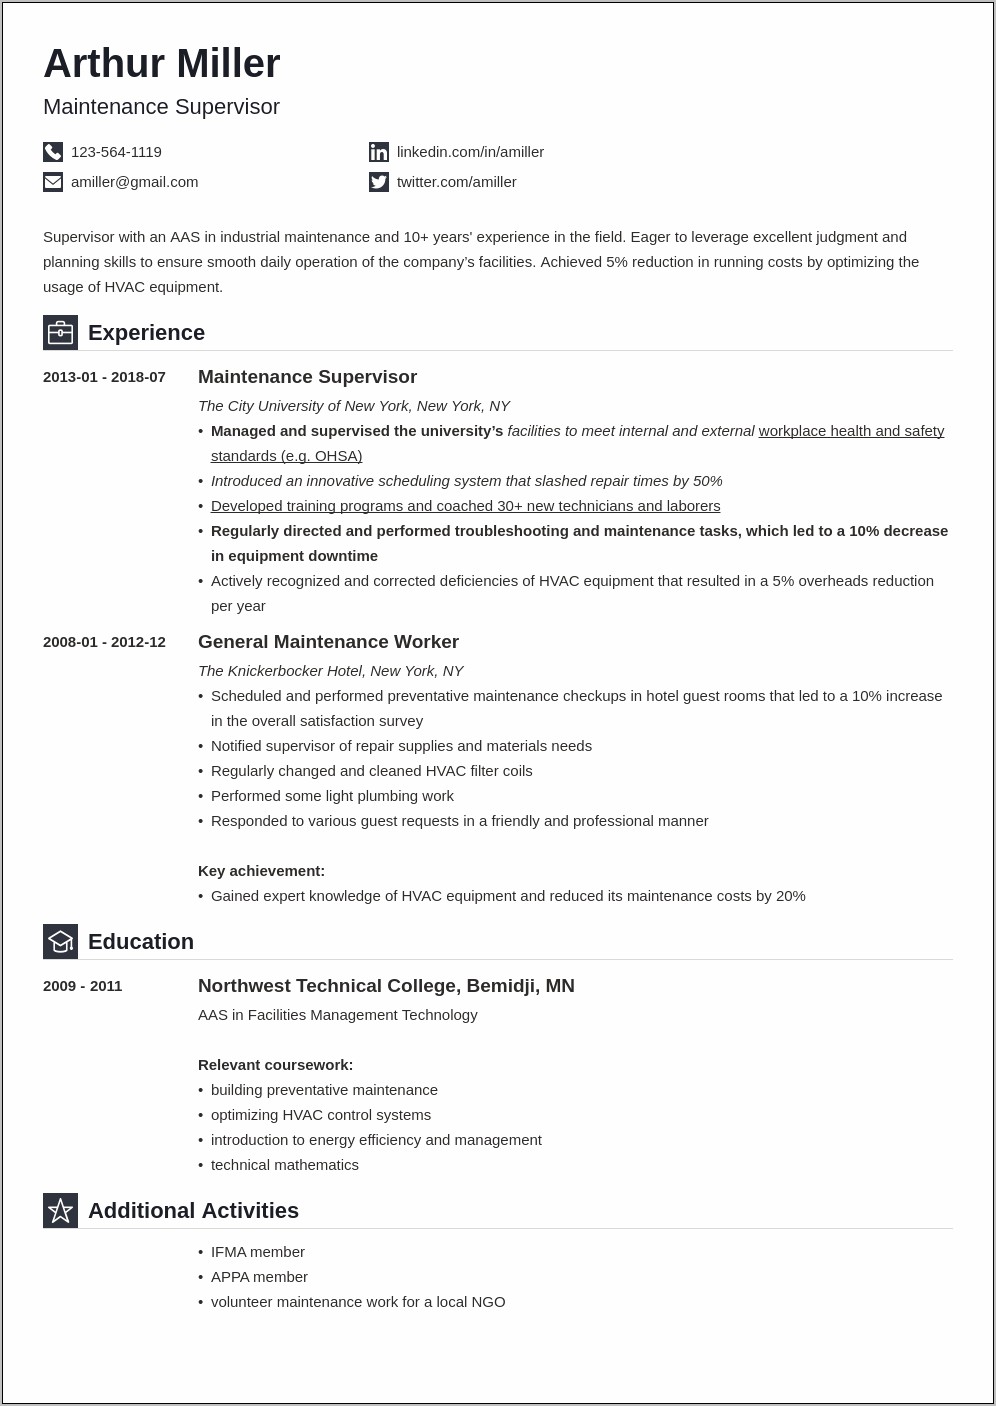 Hotel Technician Job Description Resume